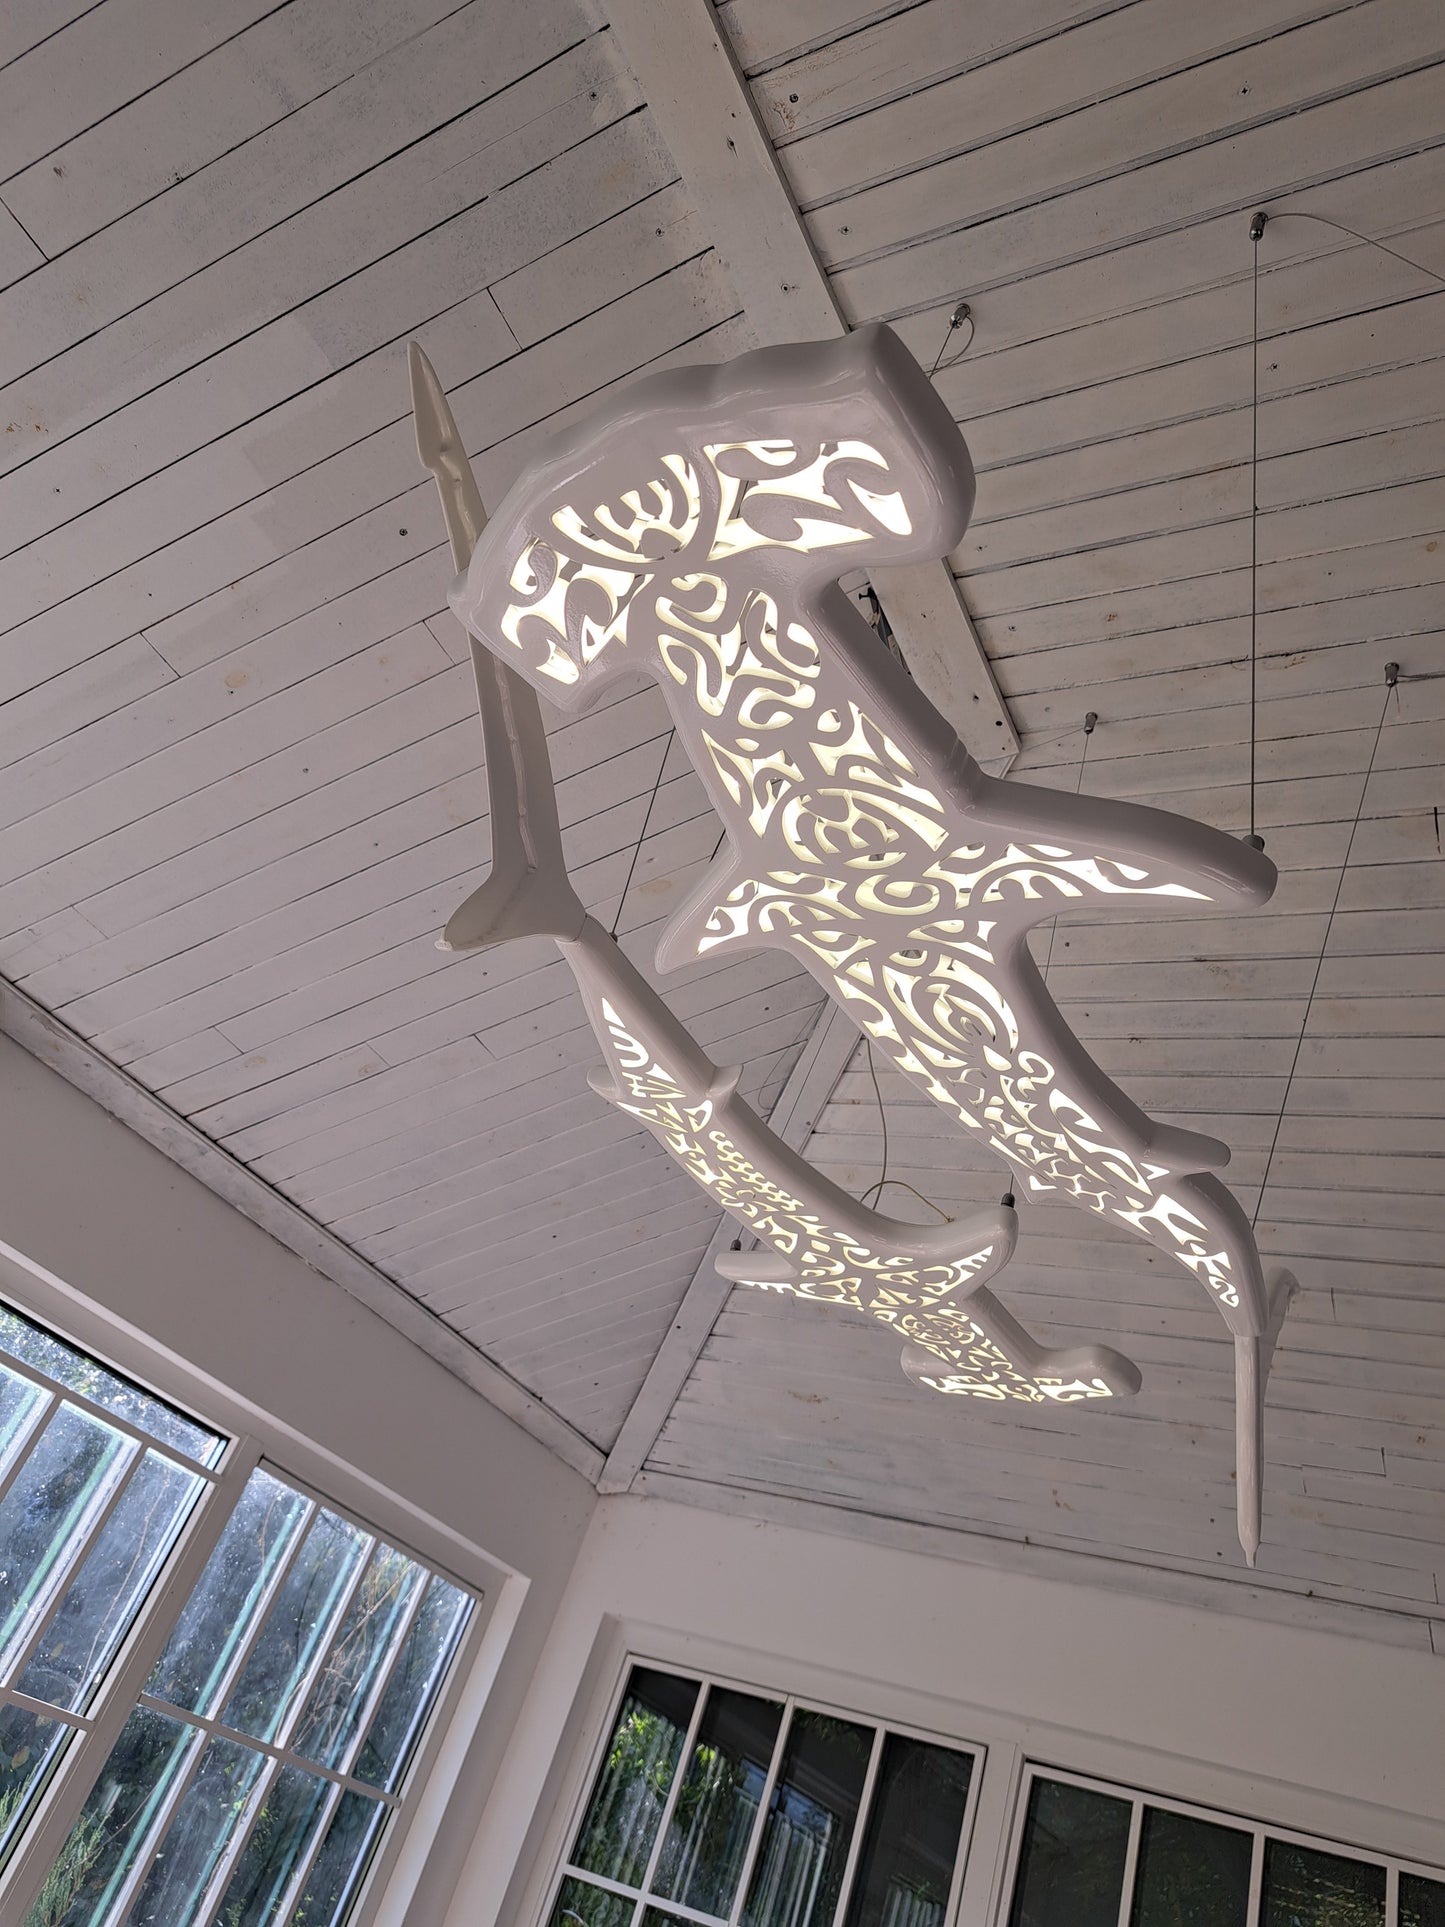 150 cm Handmade wood ceiling chandelier with 2 hammerhead sharks: LED wall light for beach coastal or nautical Maori surfing style room decor